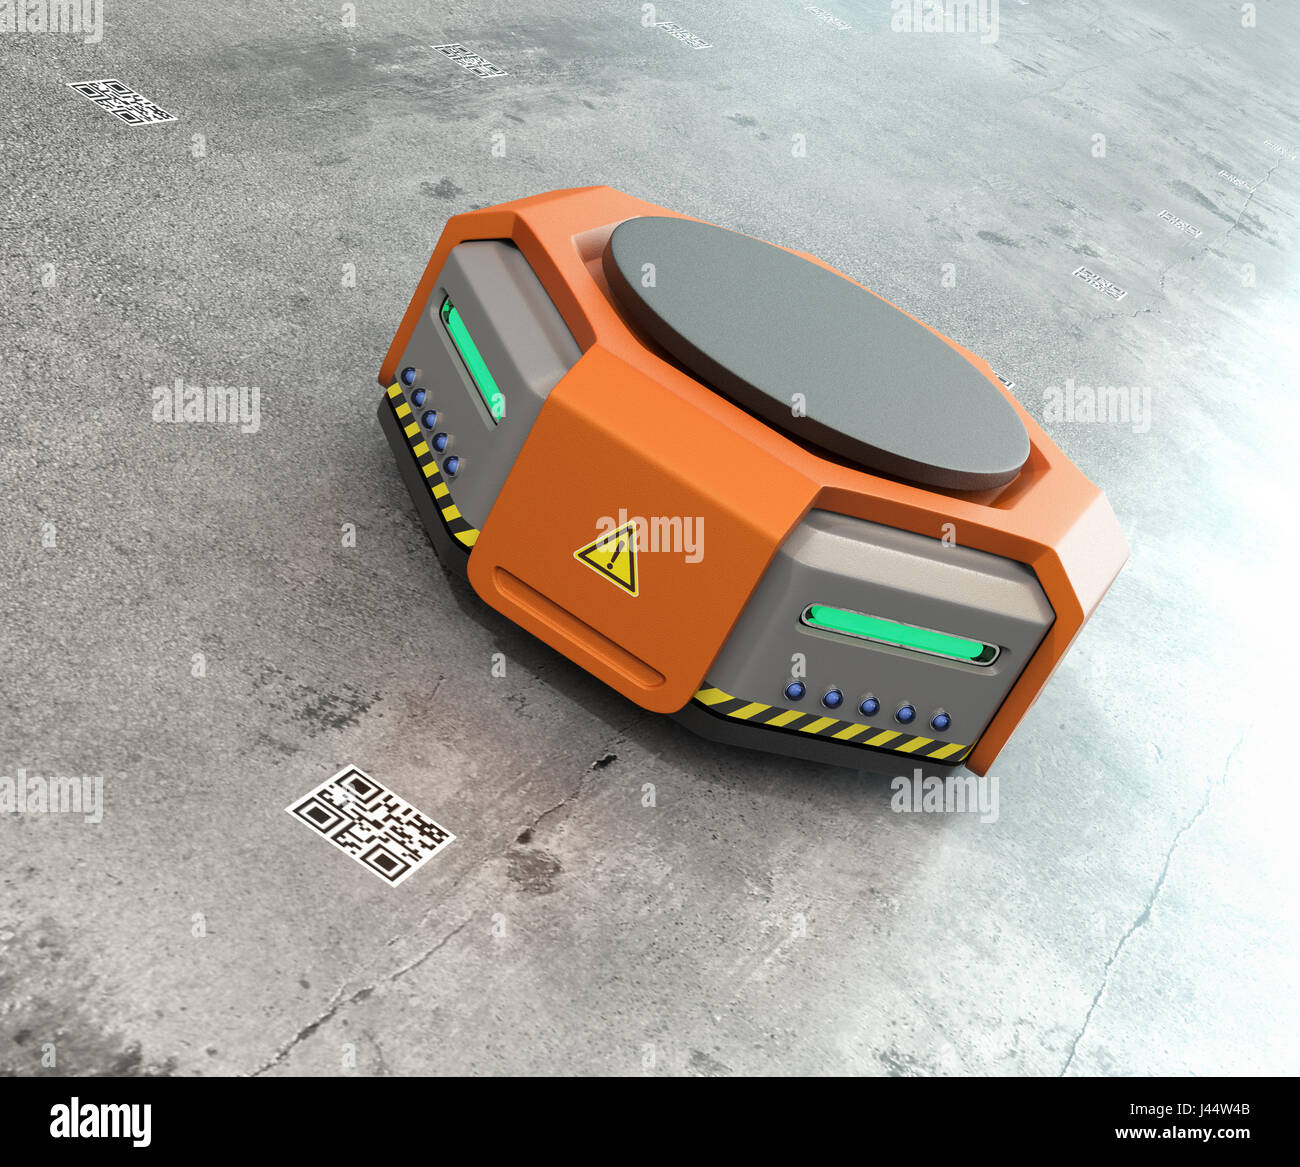 Orange warehouse robot on the concrete background. 3D rendering image. Stock Photo